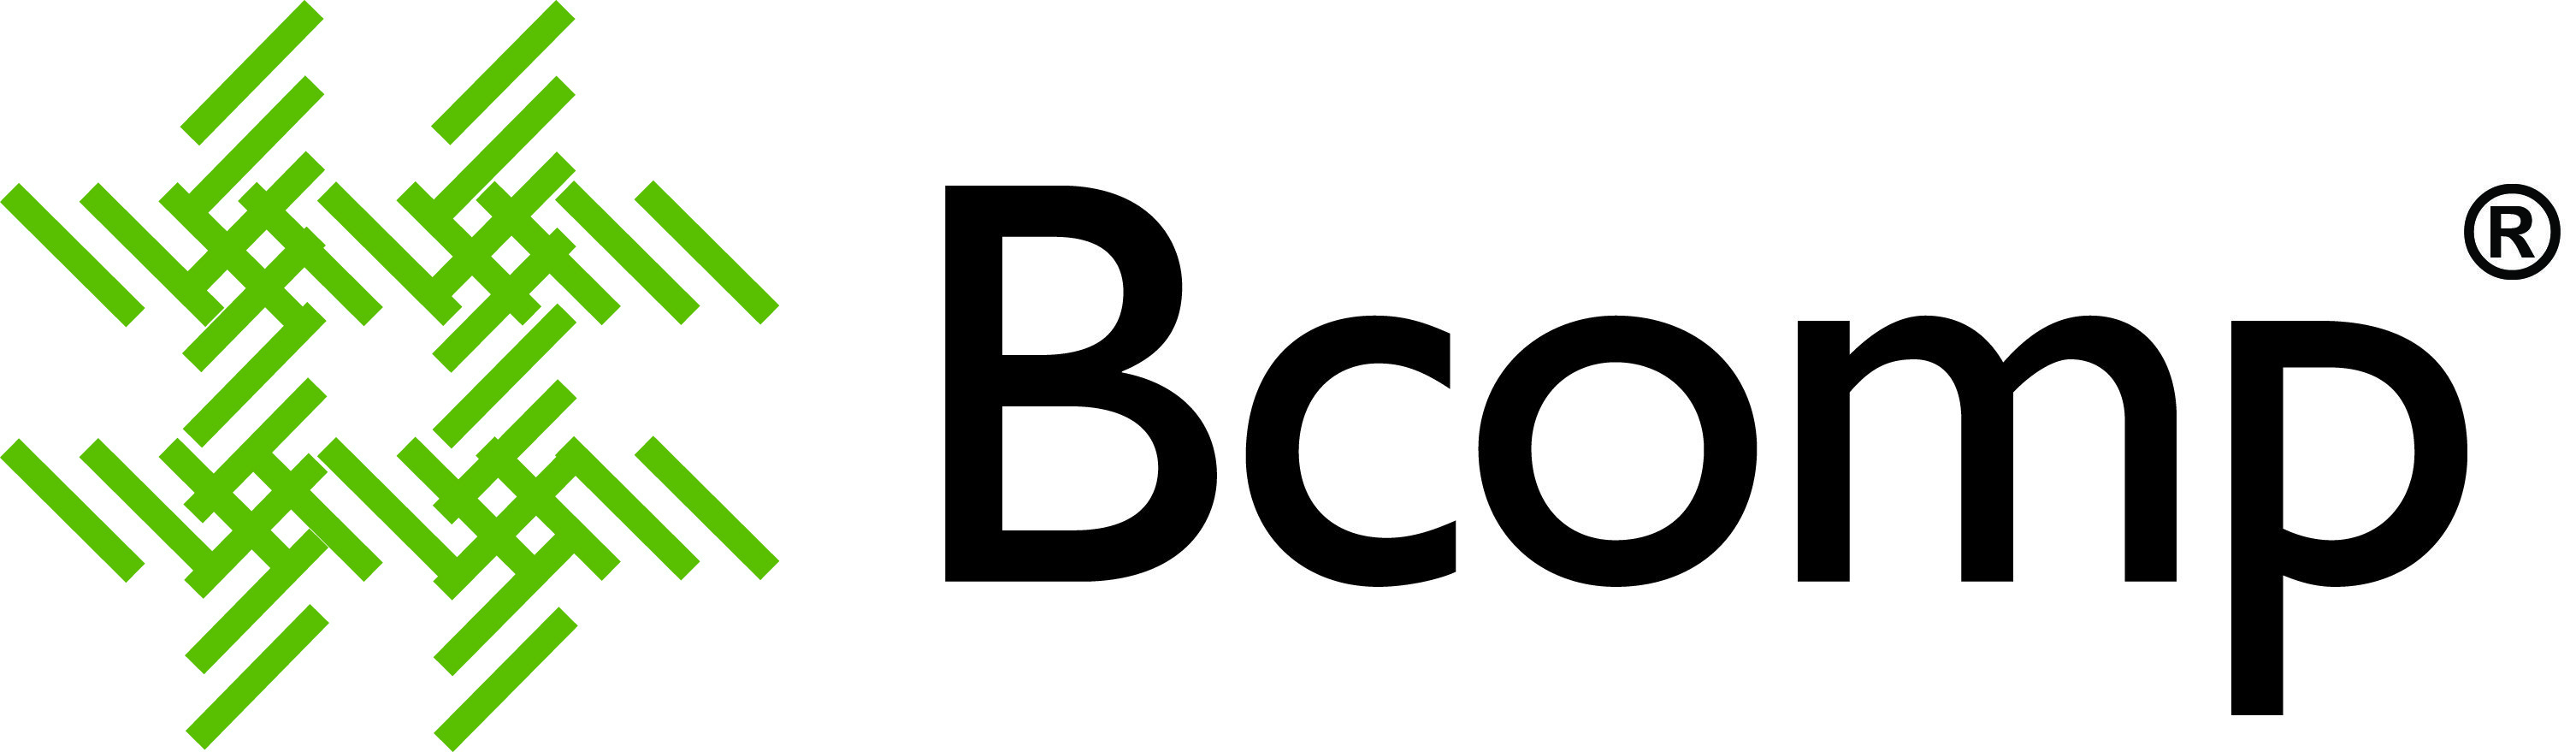 Logo_Bcomp_R